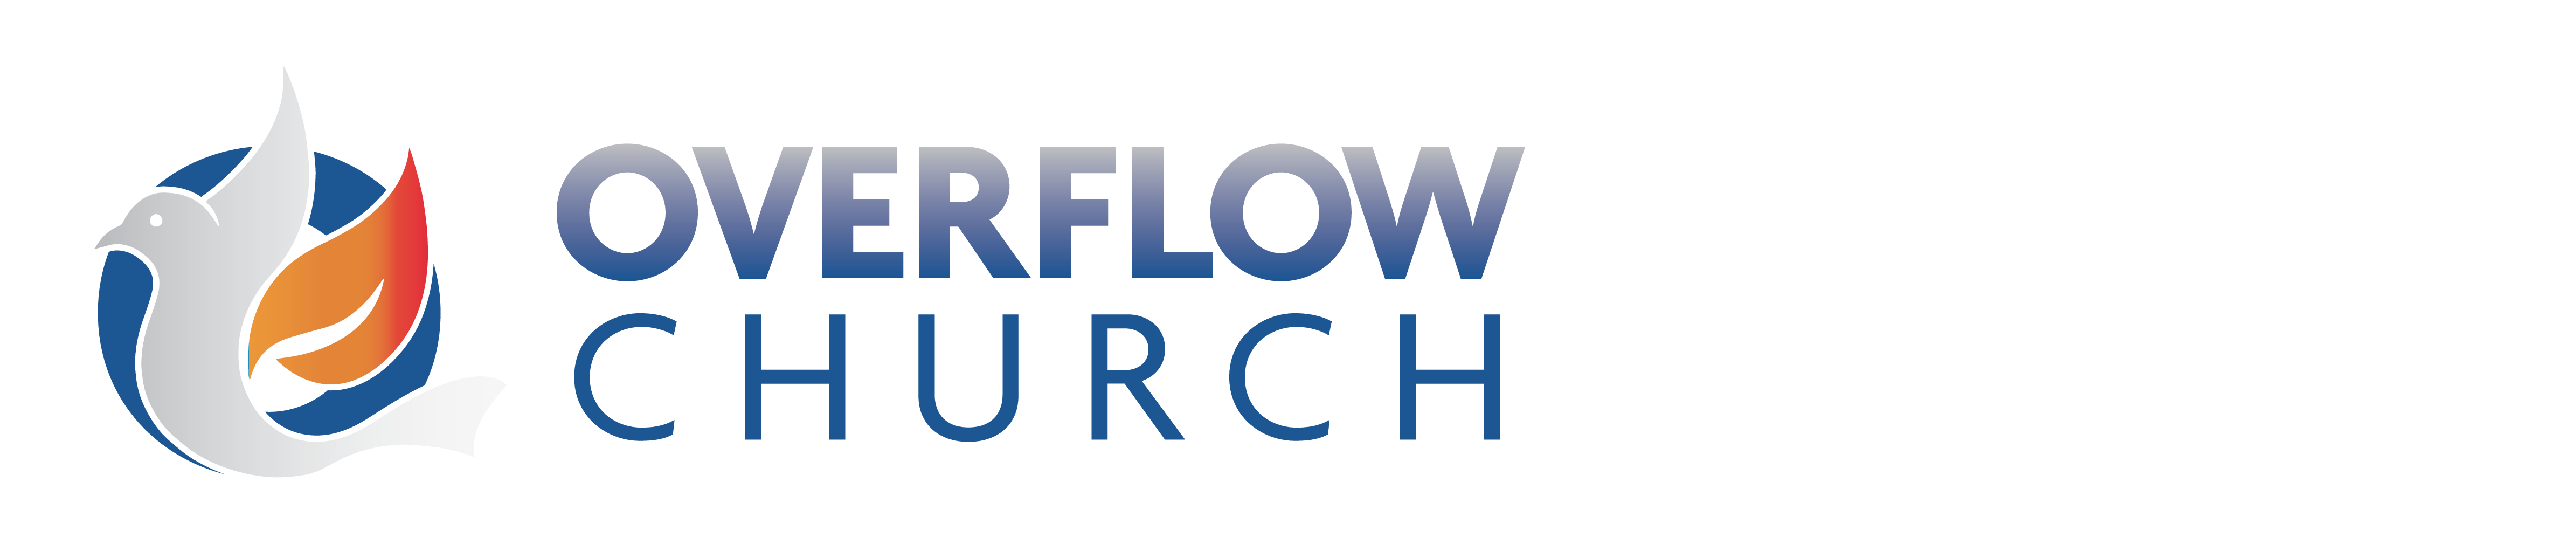 Overflow Church - Your Local Church